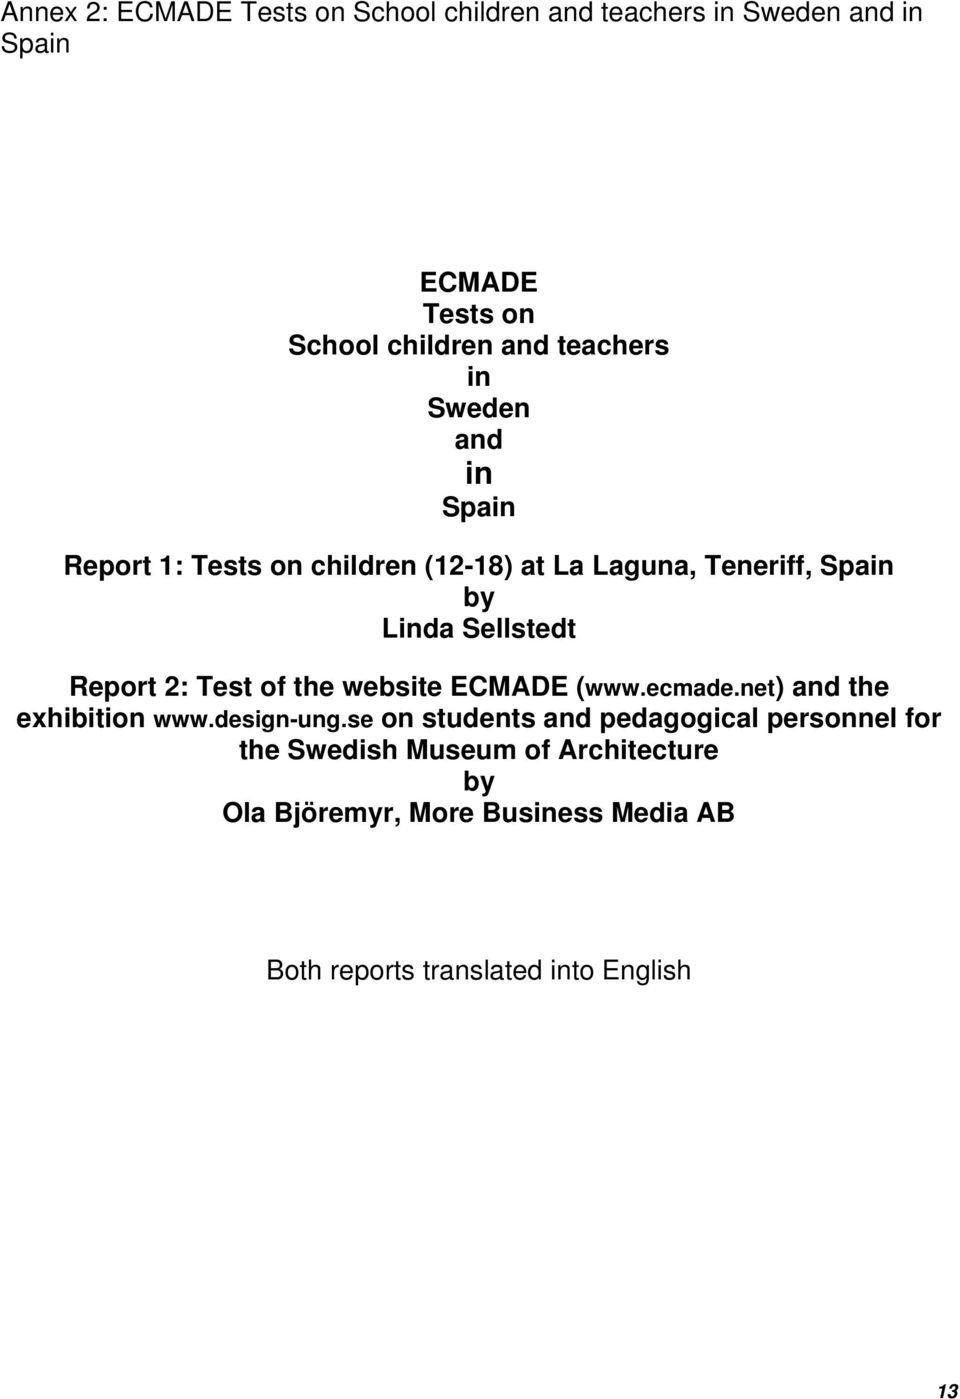 Report 2: Test the website ECMADE (www.ecmade.net) and the exhibition www.design-ung.